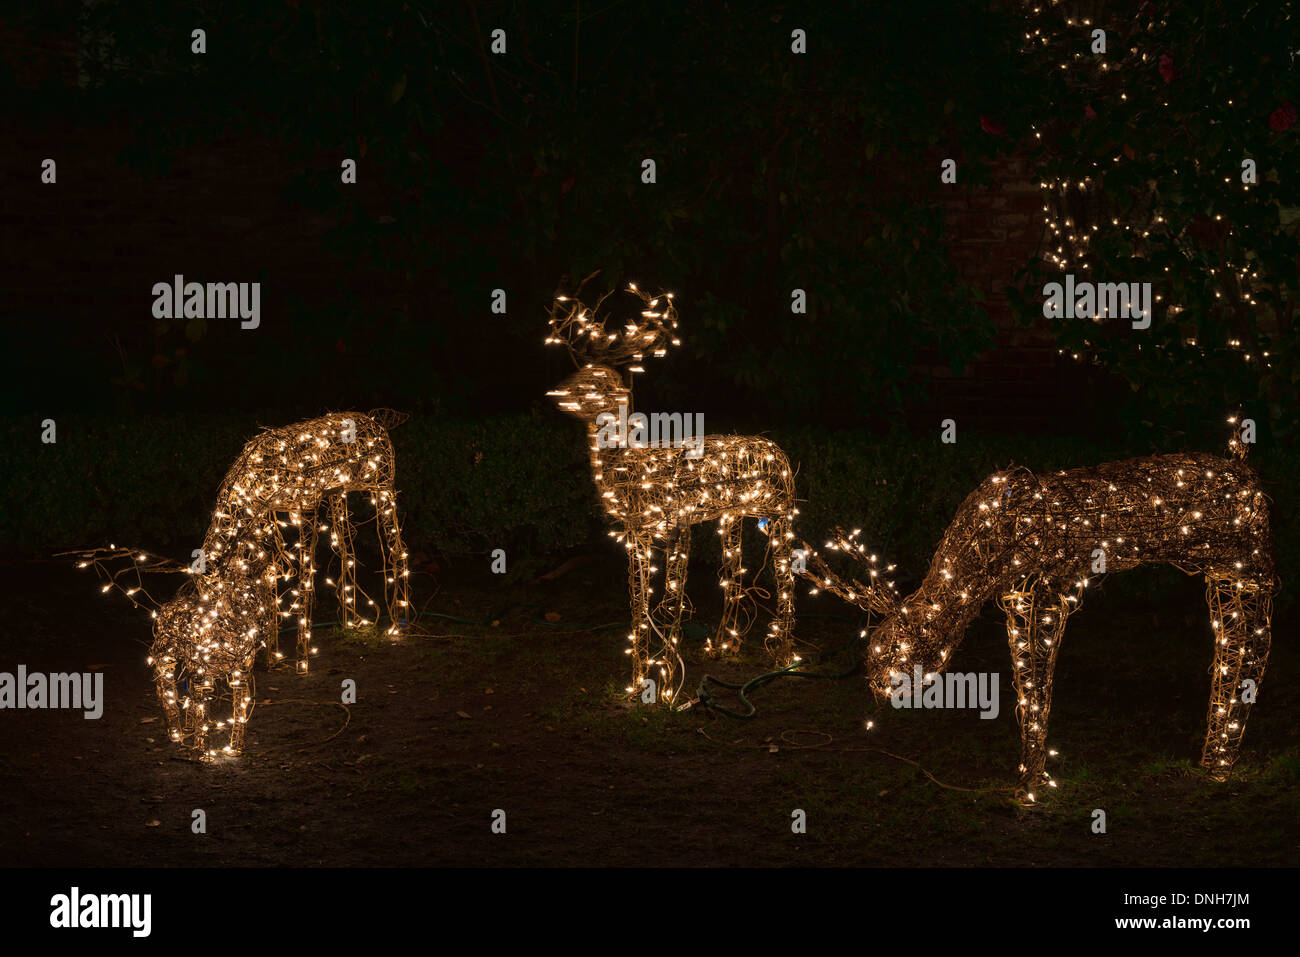 Reindeer Christmas light display Stock Photo